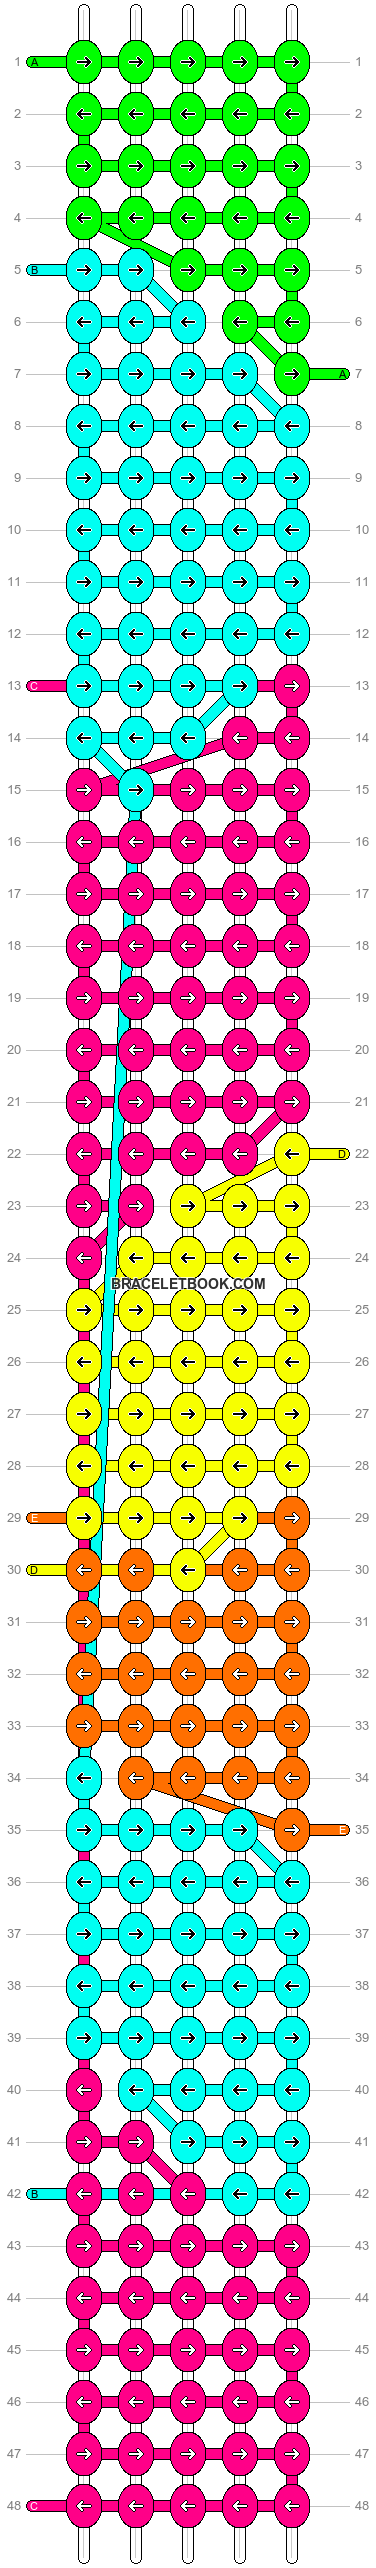 Alpha pattern #53368 variation #88022 pattern